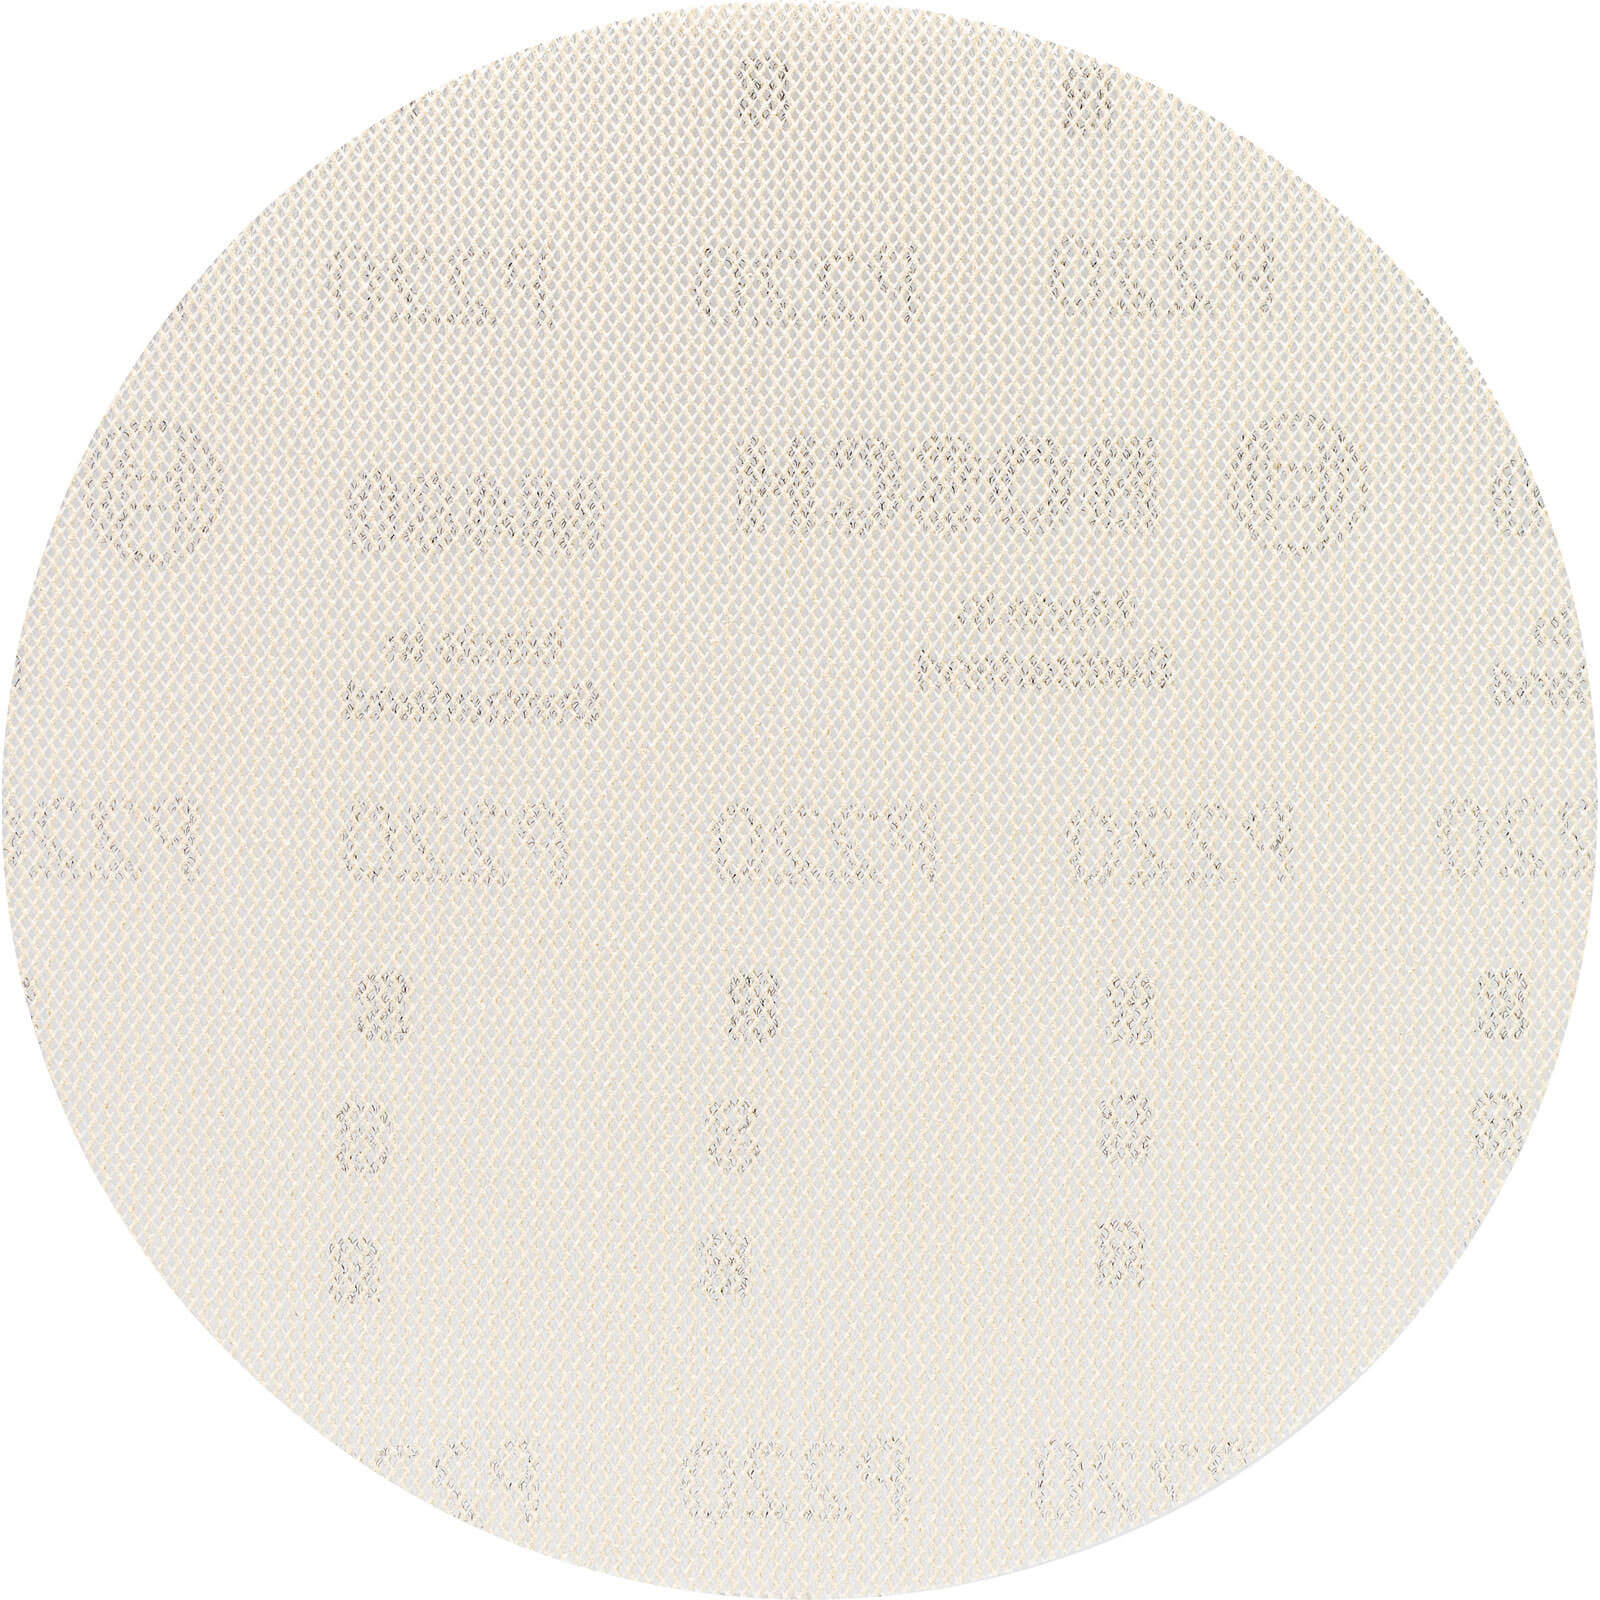 Photo of Bosch M480 150mm Net Abrasive Sanding Disc 150mm 220g Pack Of 50